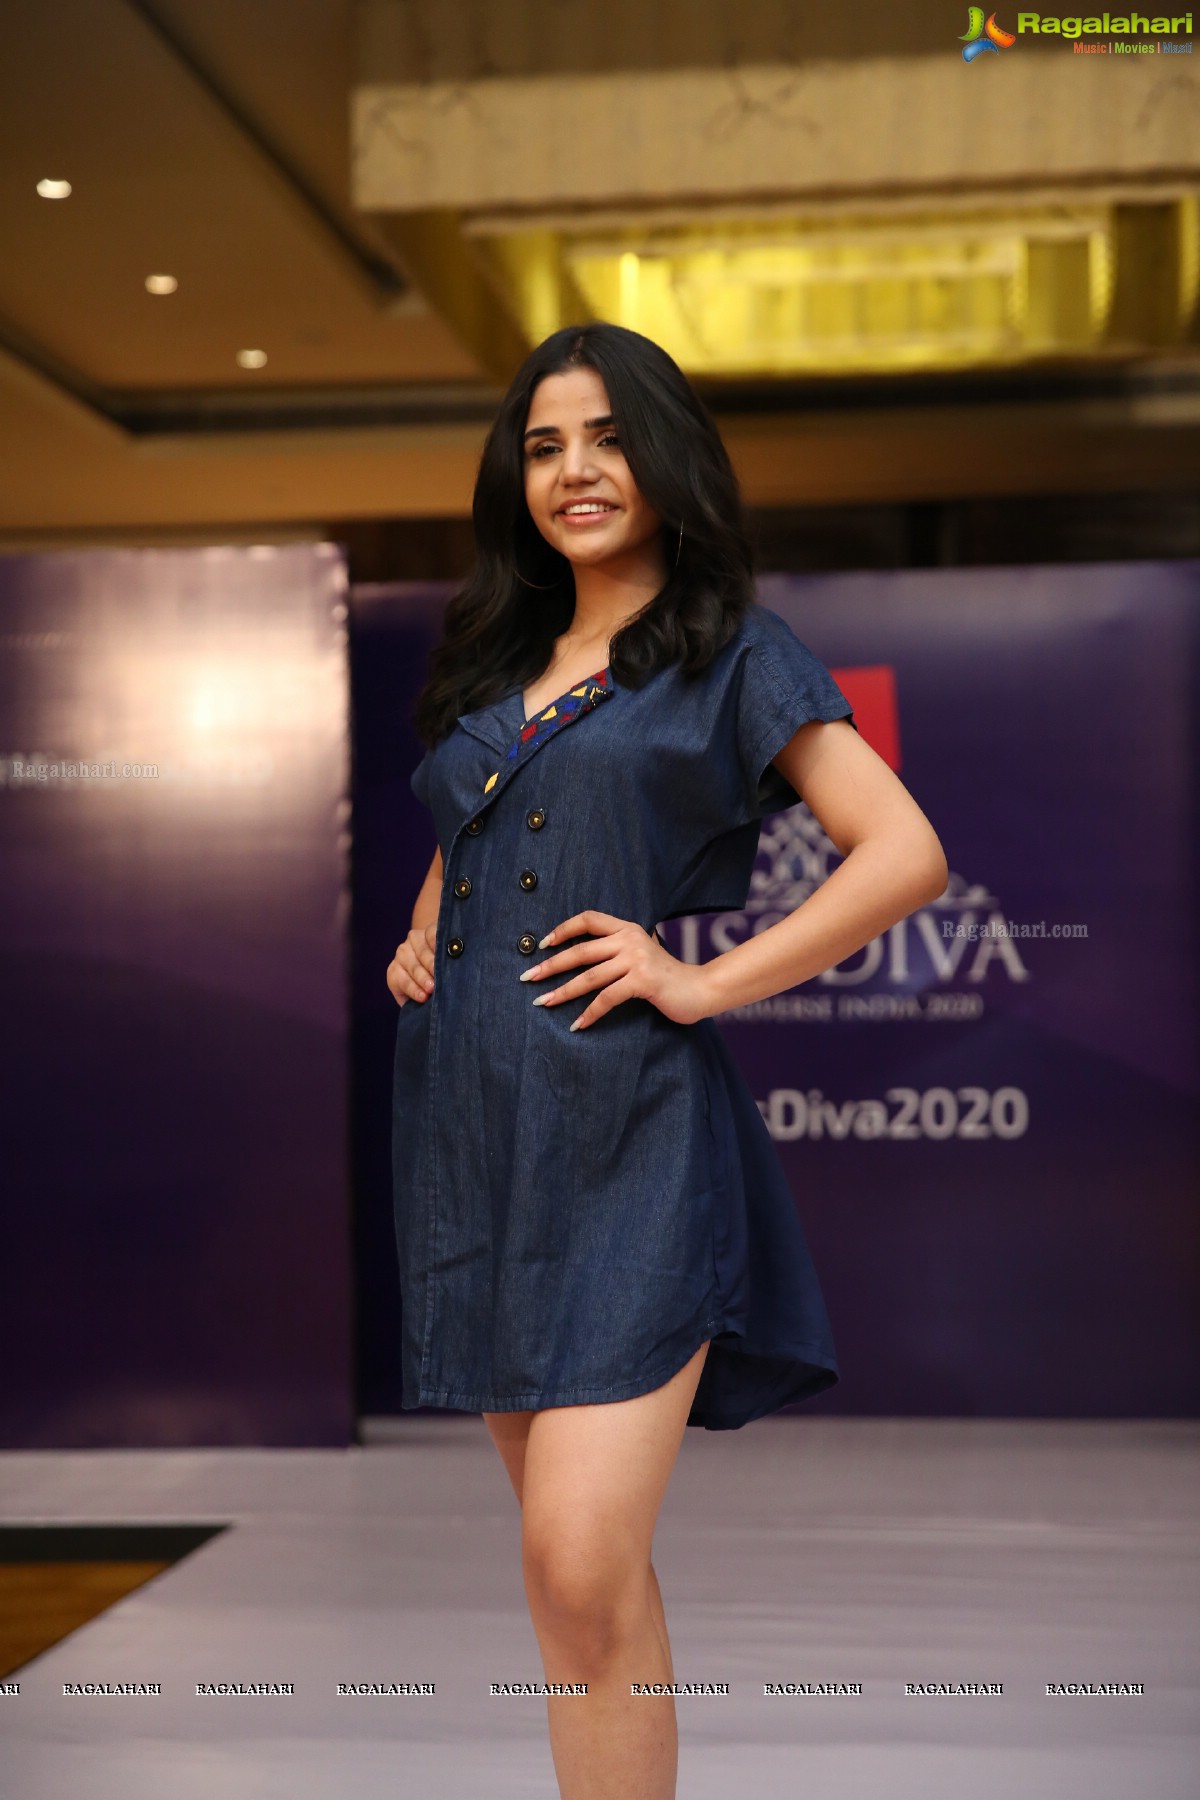 Miss Diva Miss Universe India 2020 Hyderabad Audition